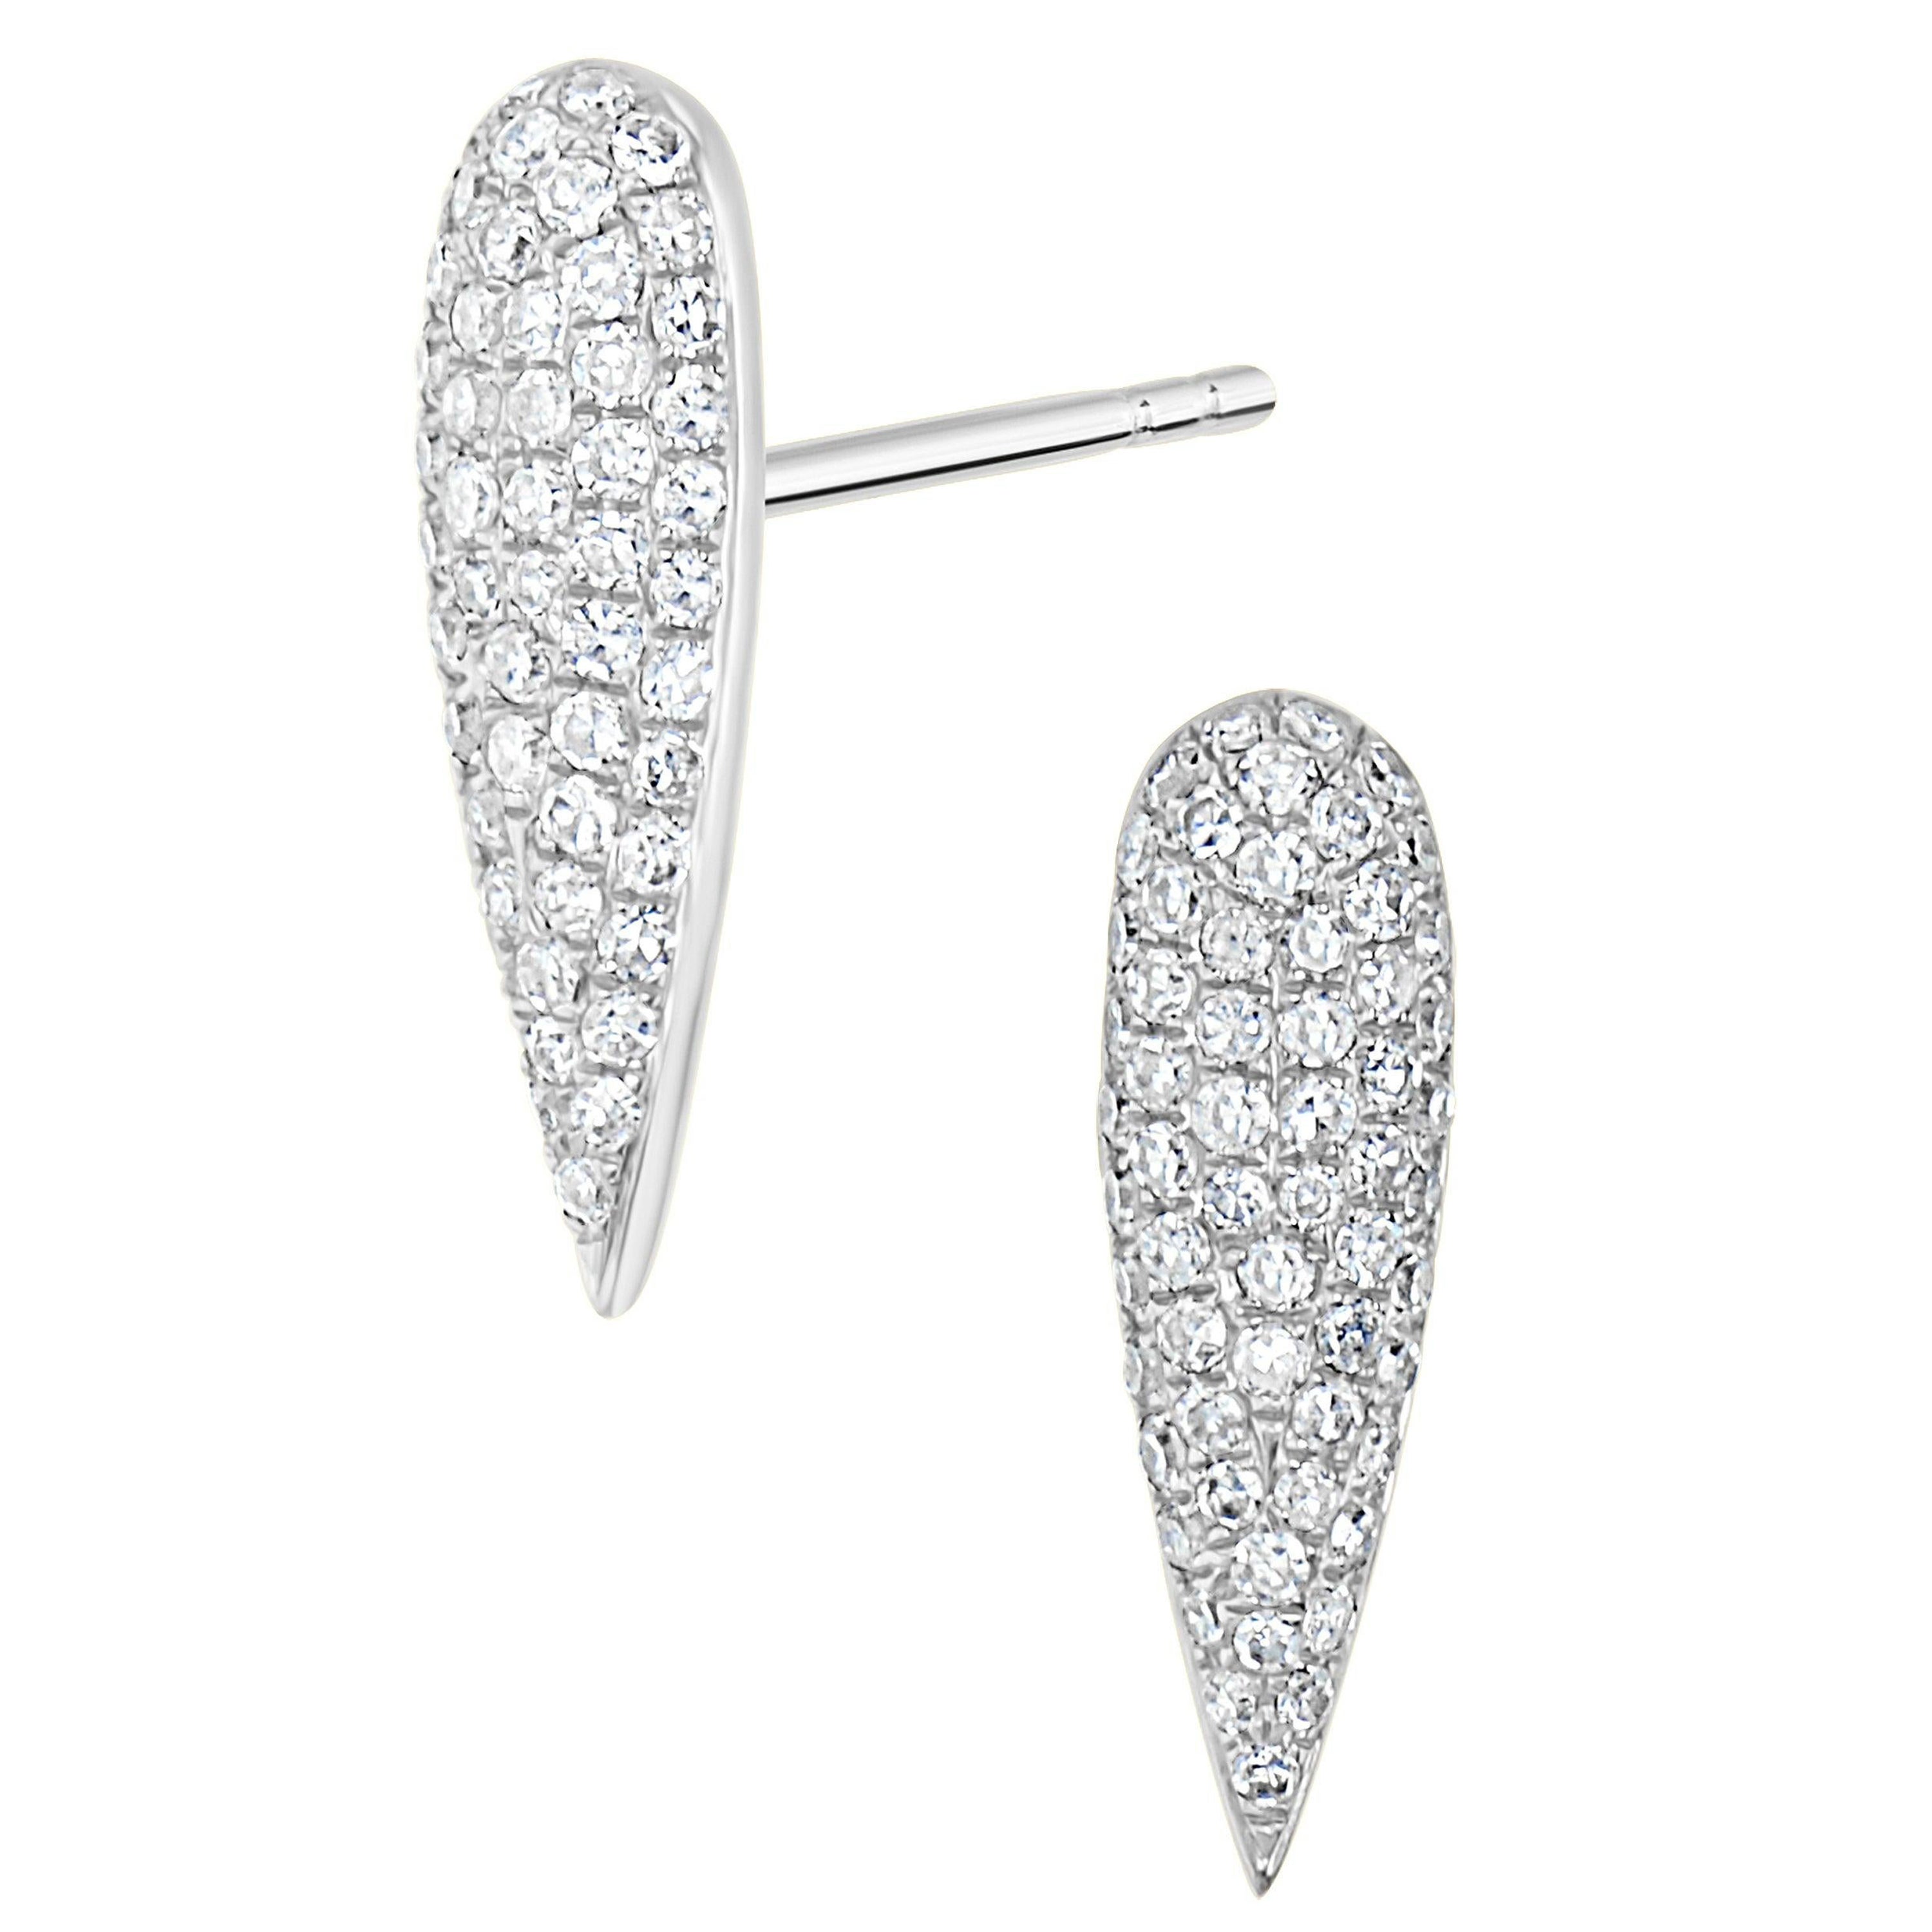 Luxle Pave Diamond Pear Stud Earrings in 14k White Gold